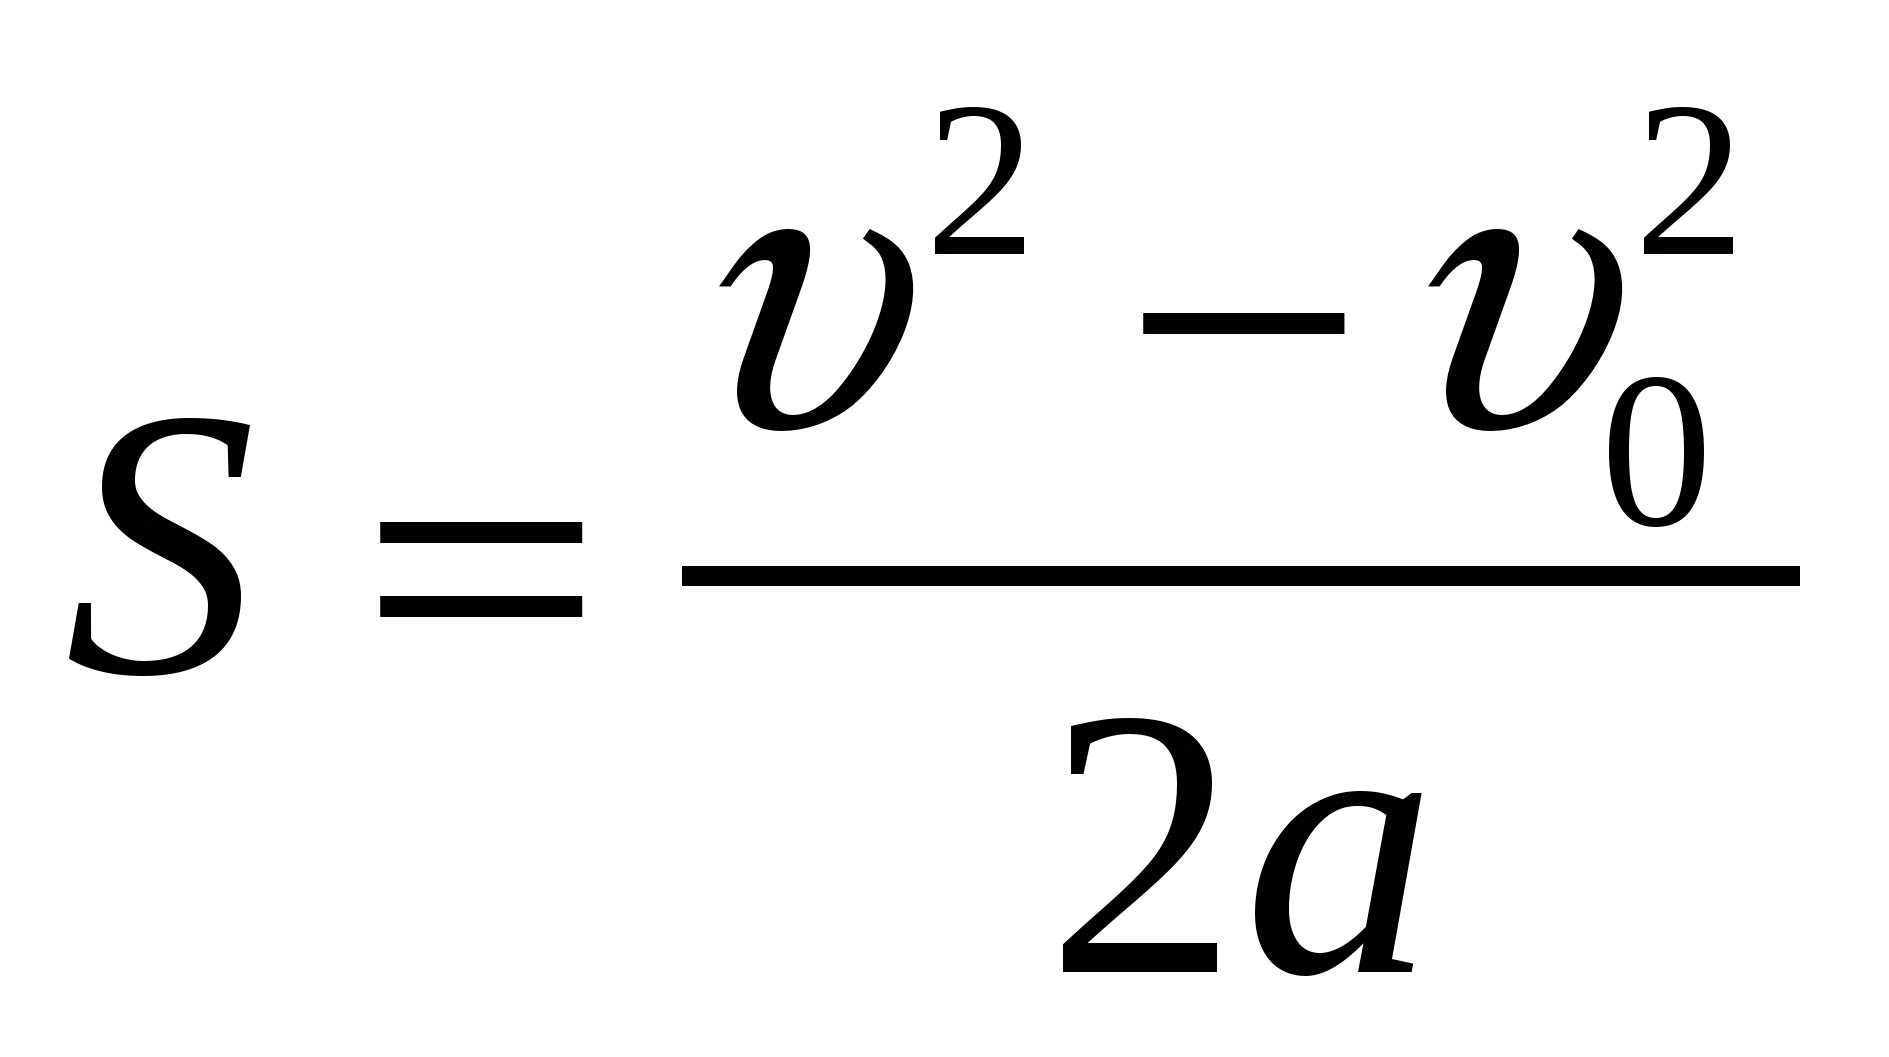 100.000 2. S v2 v02/2a. S V 2-v0 2/2a. V2-v2/2a. Безвременная формула перемещения.